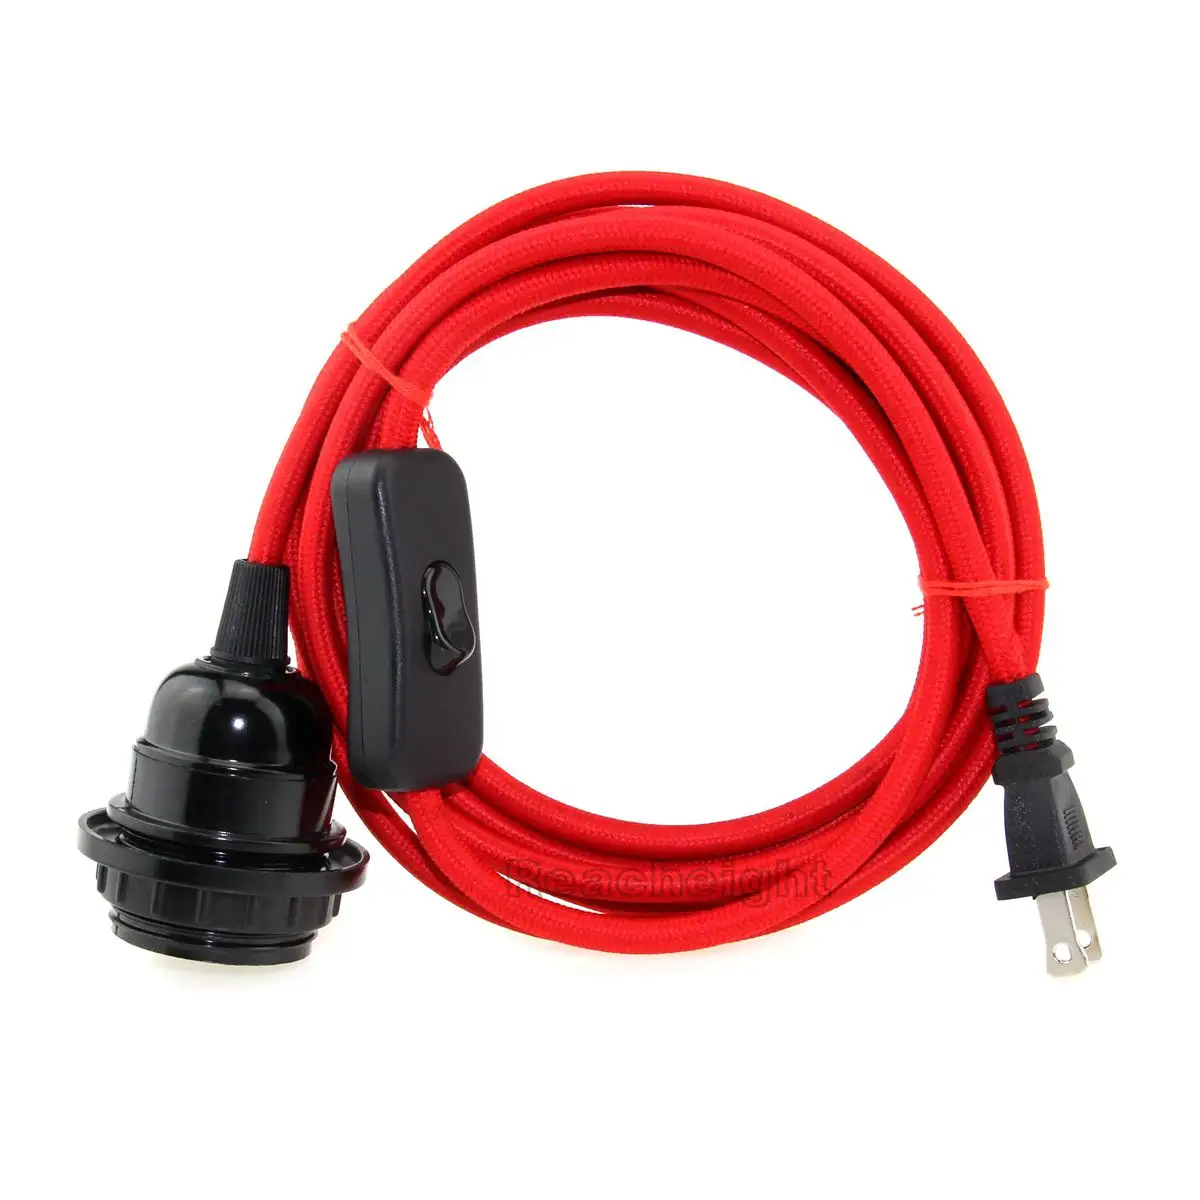 Set Kabel Lampu Soket Lampu E26, Warna Merah Hitam Putih 6,5 Kaki 2 Cabang US Terpolarisasi